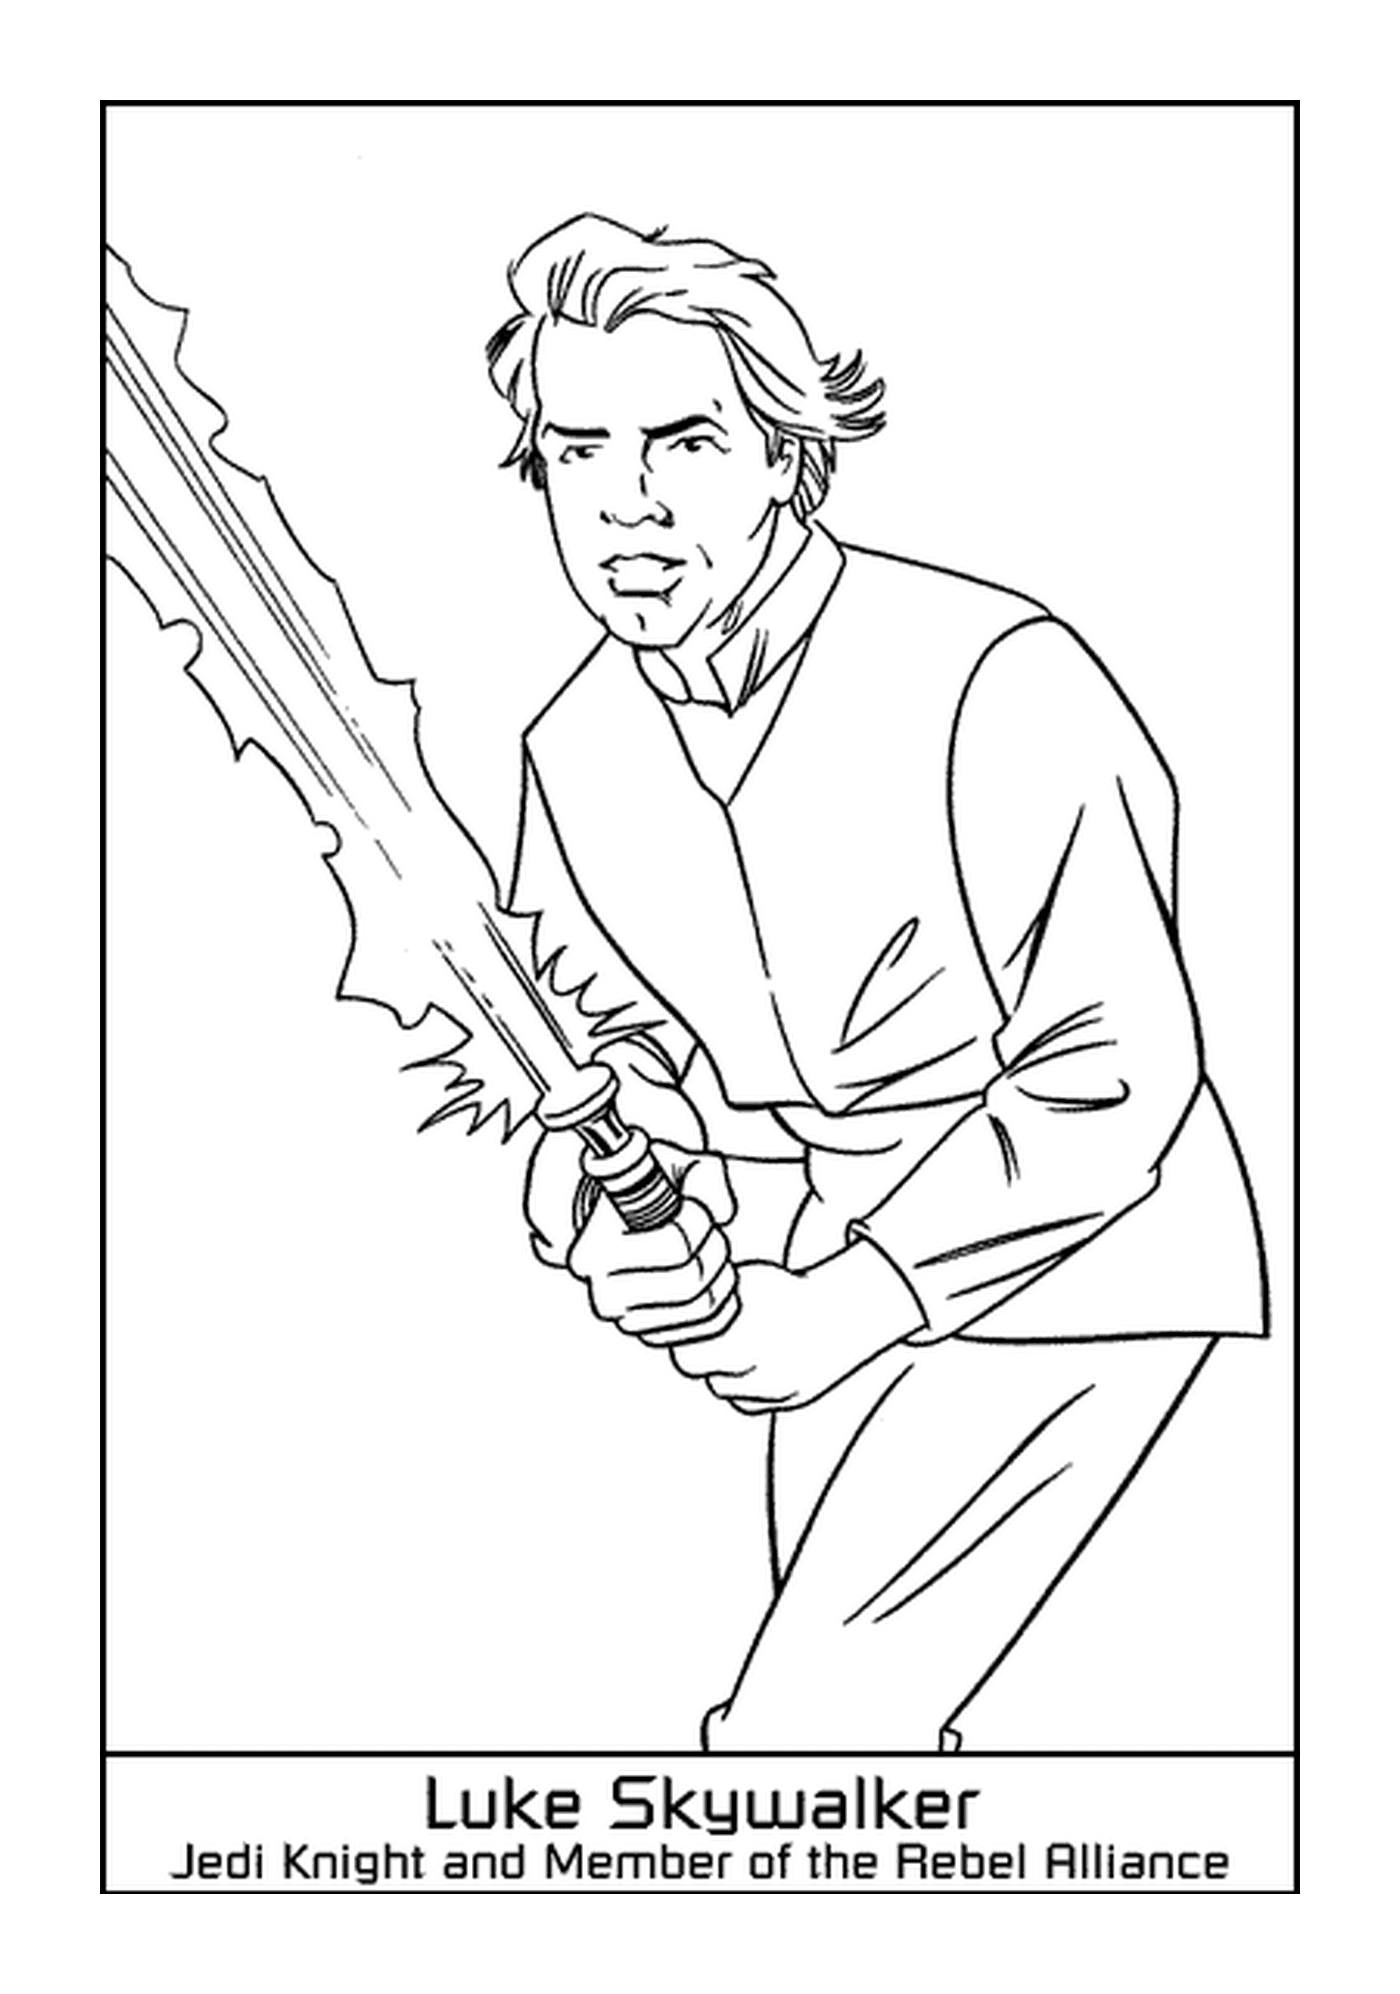  Luke Skywalker, el héroe 